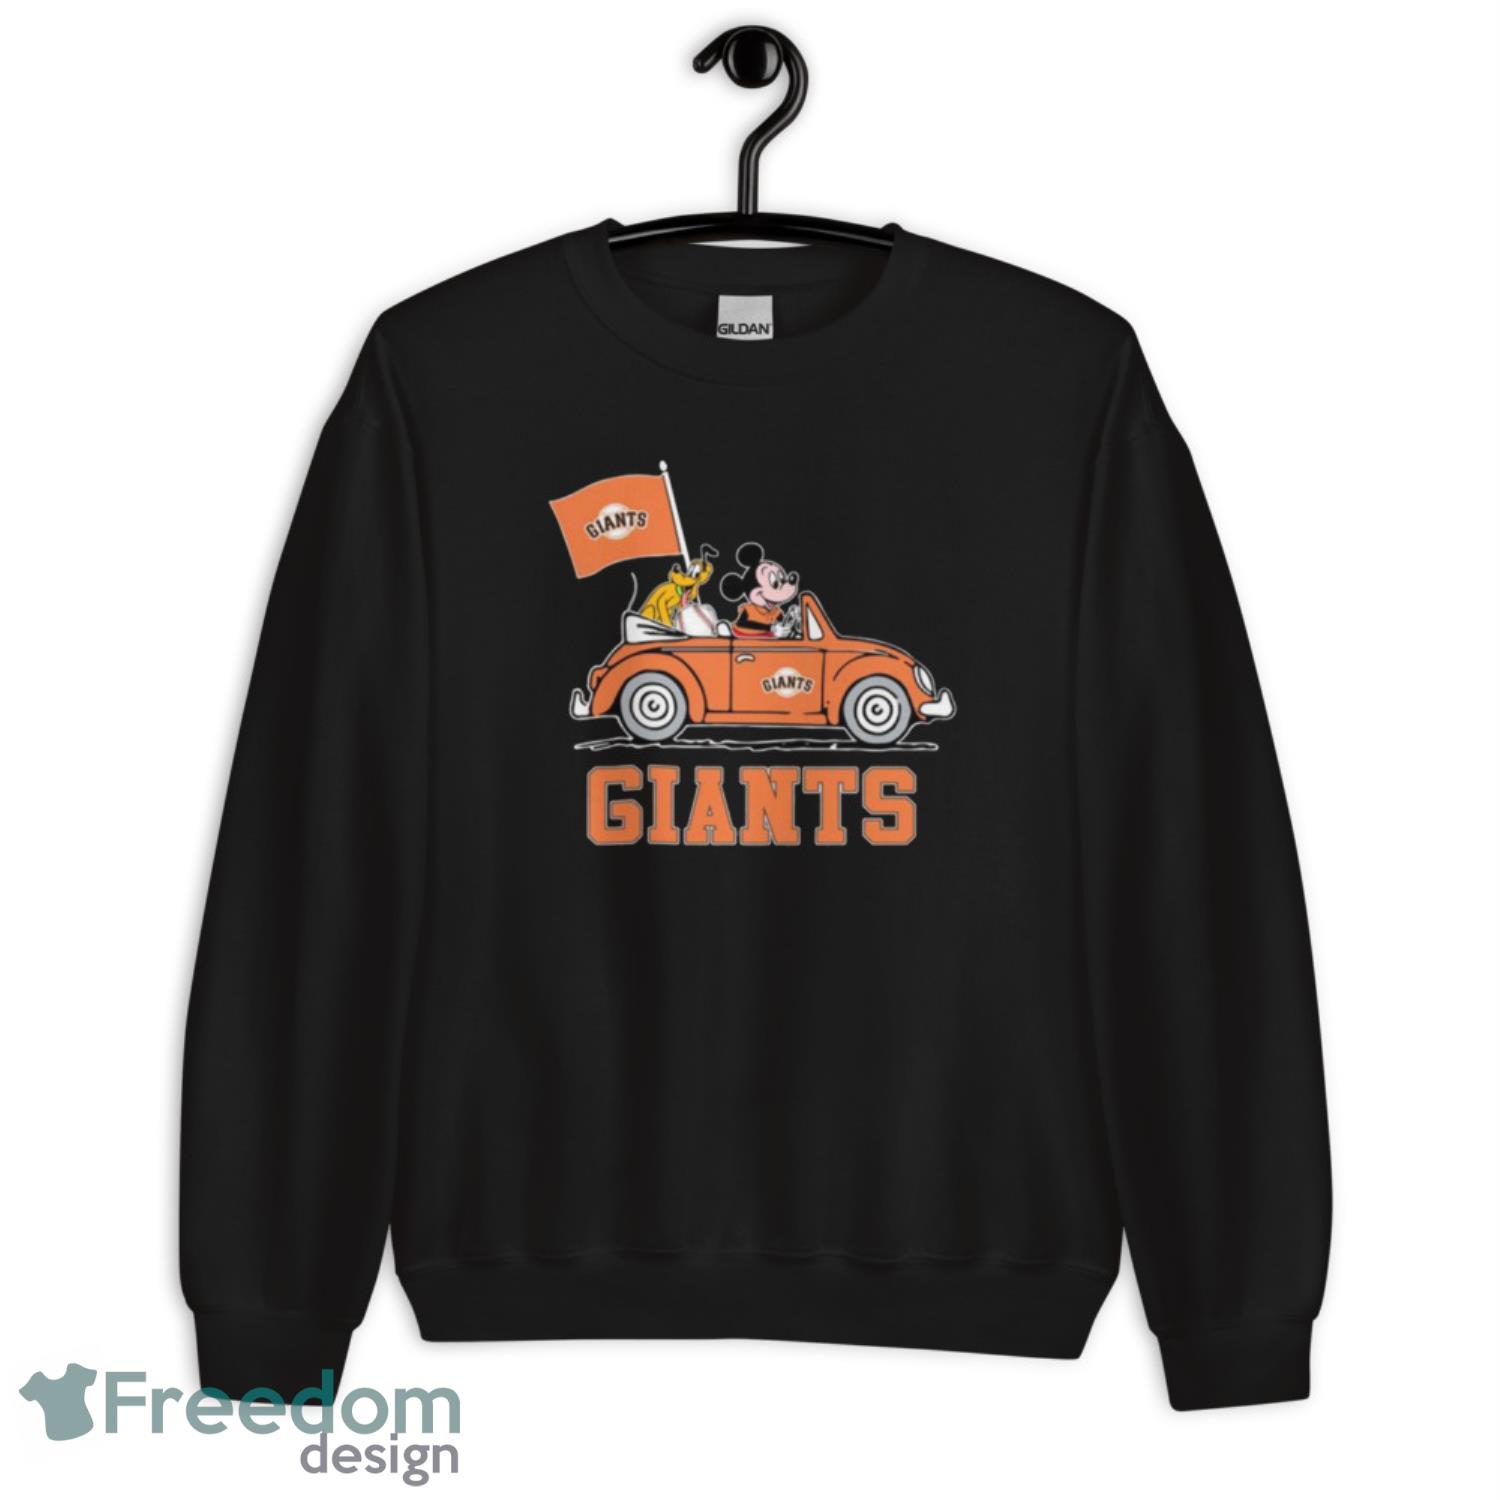 Vintage San Francisco Giant Crewneck Sweatshirt / T-shirt 